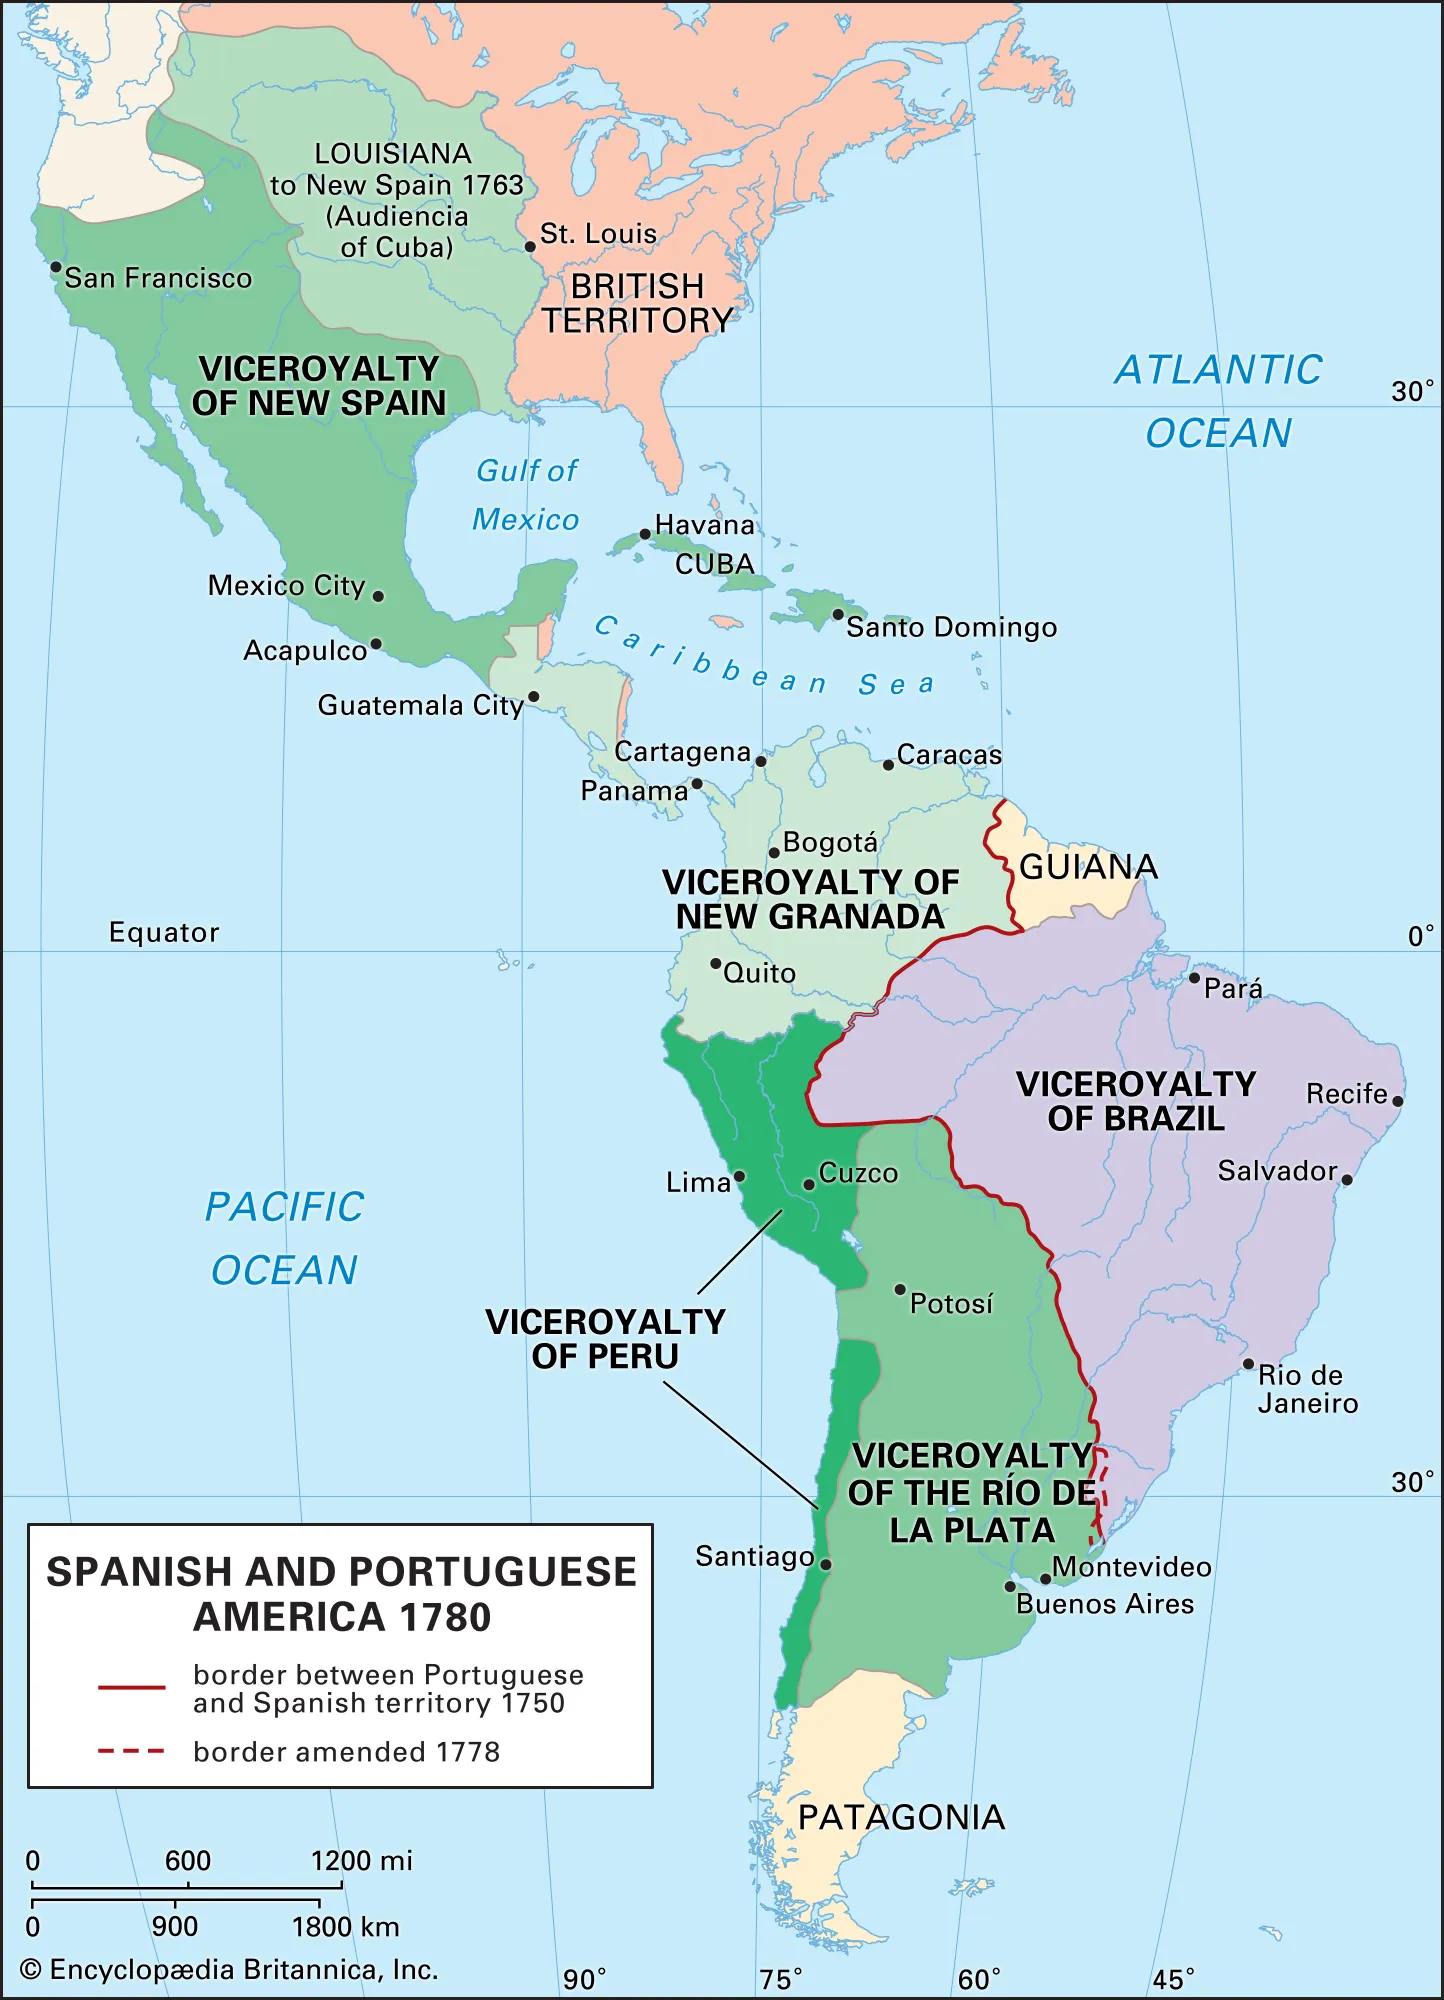 <ul><li><p>spanish in new spain (mexico city)/vicroyalty of peru (lime)</p></li><li><p>portugese in brazil, trading posts</p></li><li><p>treaty of tordesillas divided world for portugese/spanish</p></li><li><p>other europeans: English in tobacco colonies, dutch NYC, french in canda</p></li></ul><p>INTERNATIONAL RIVALRY/WAR </p><p>dominant powers: portugese, dutch, english</p>